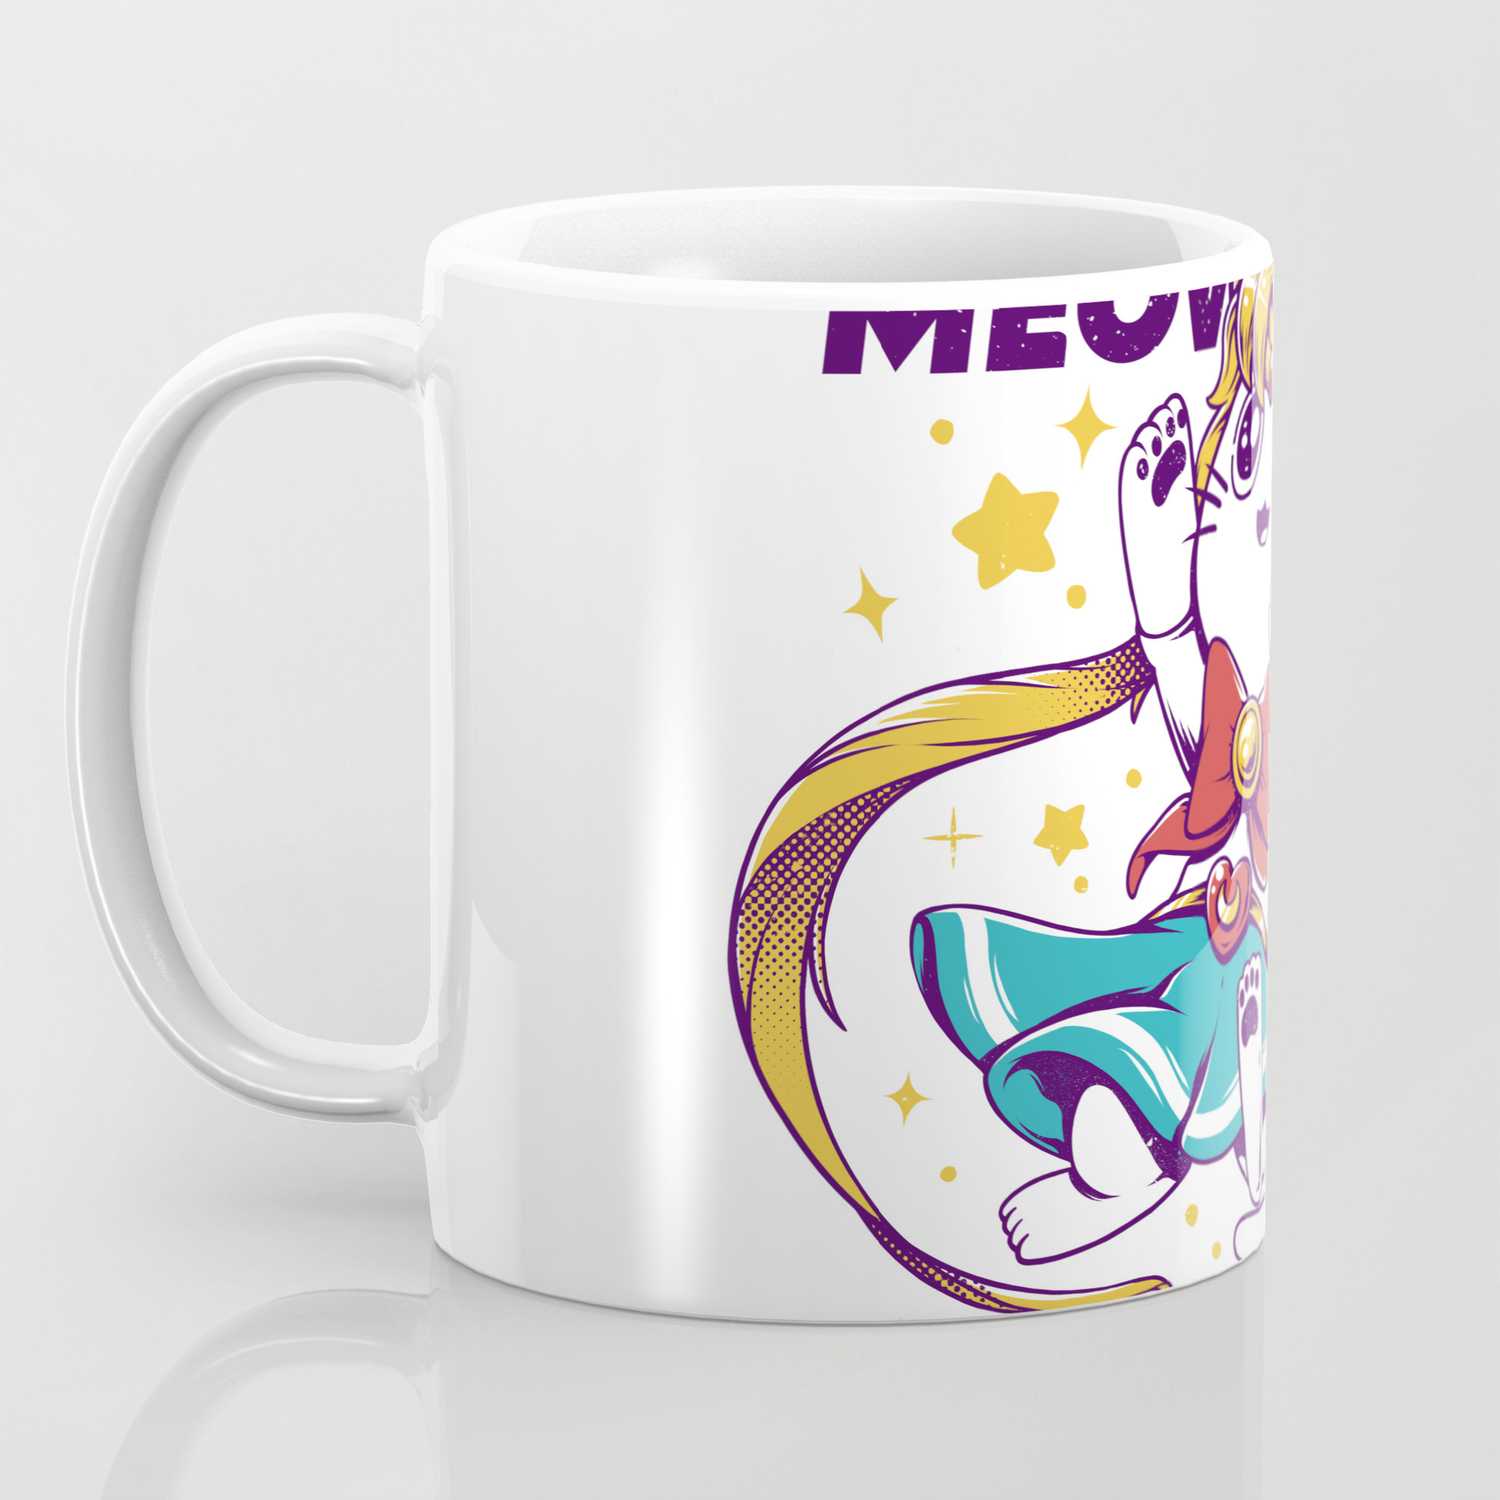 Sailor Meow Taza Ceramic Mug Cup 